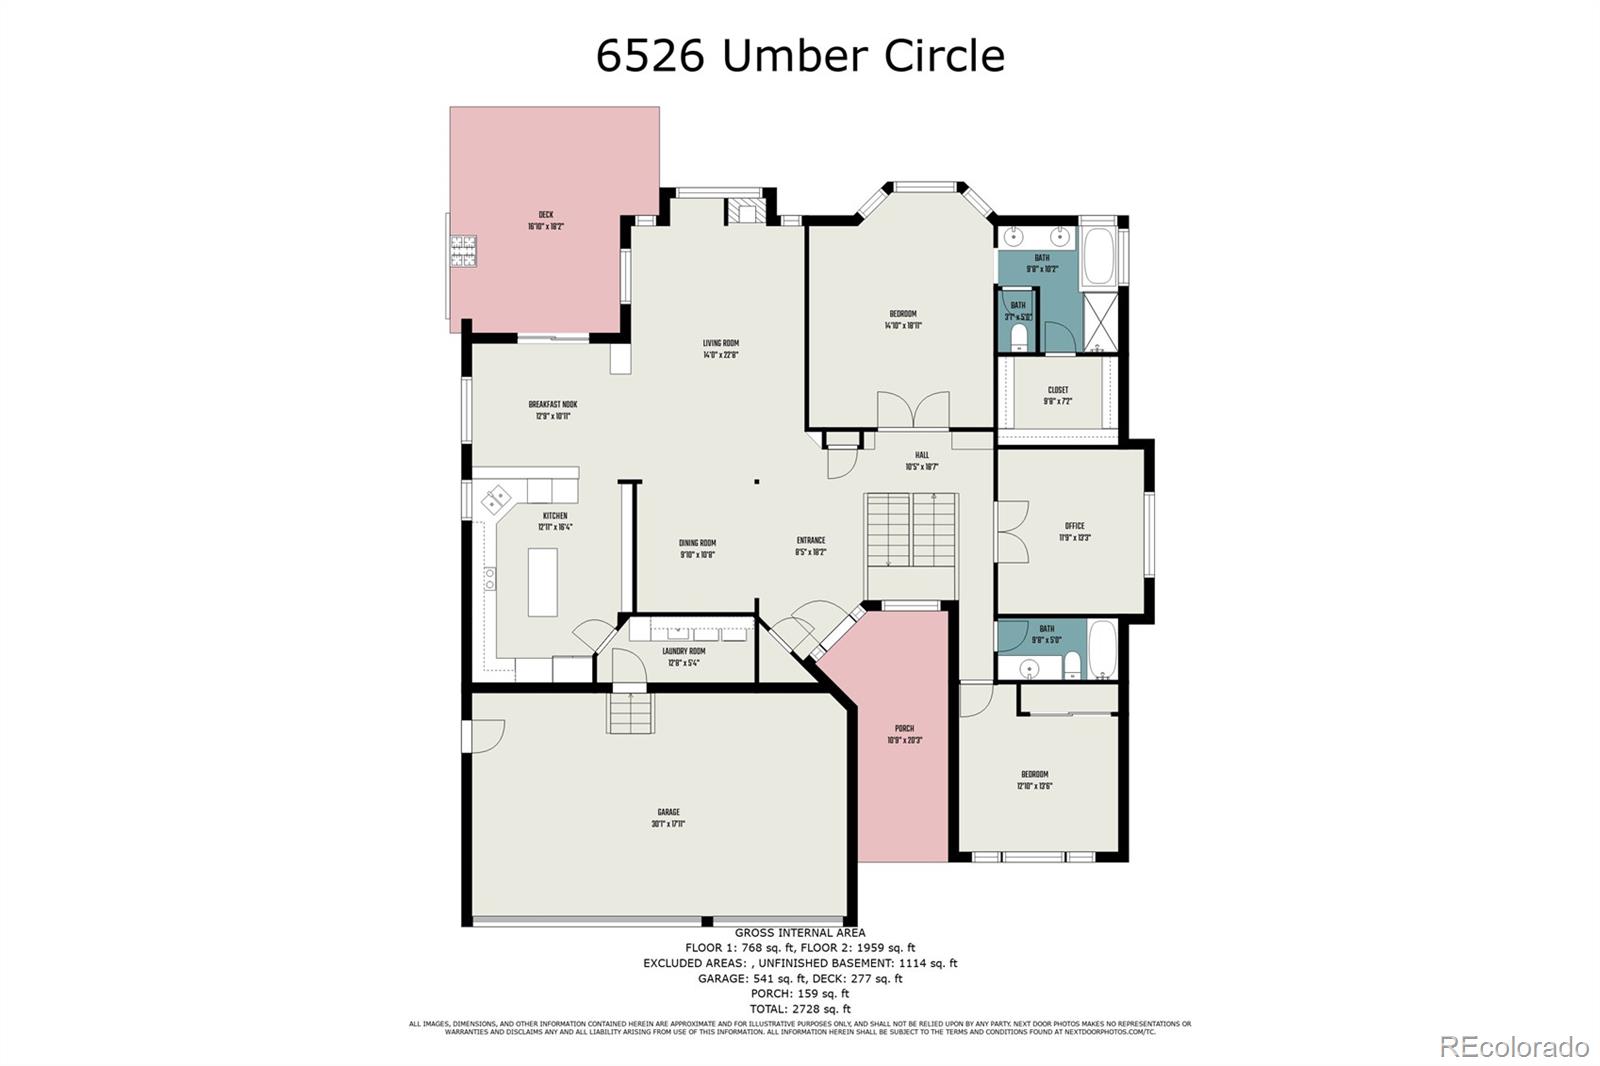 Photo 23 of 38 of 6526 Umber Circle house